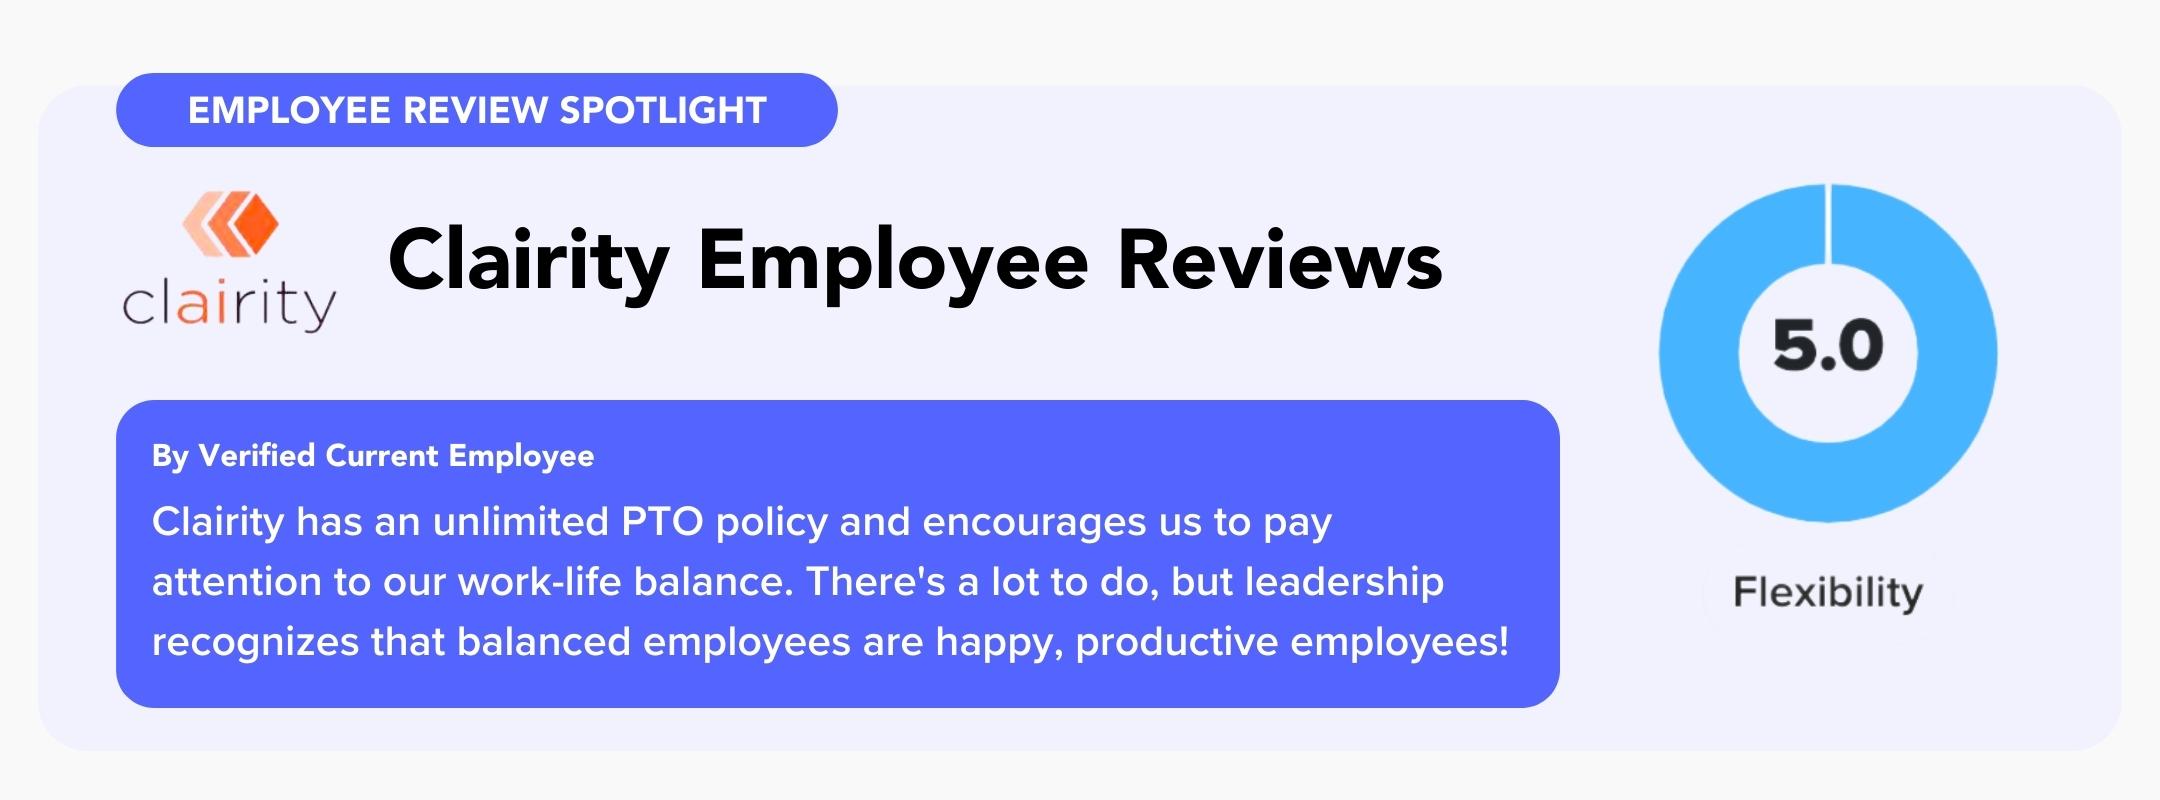 Clairity employee review spotlight